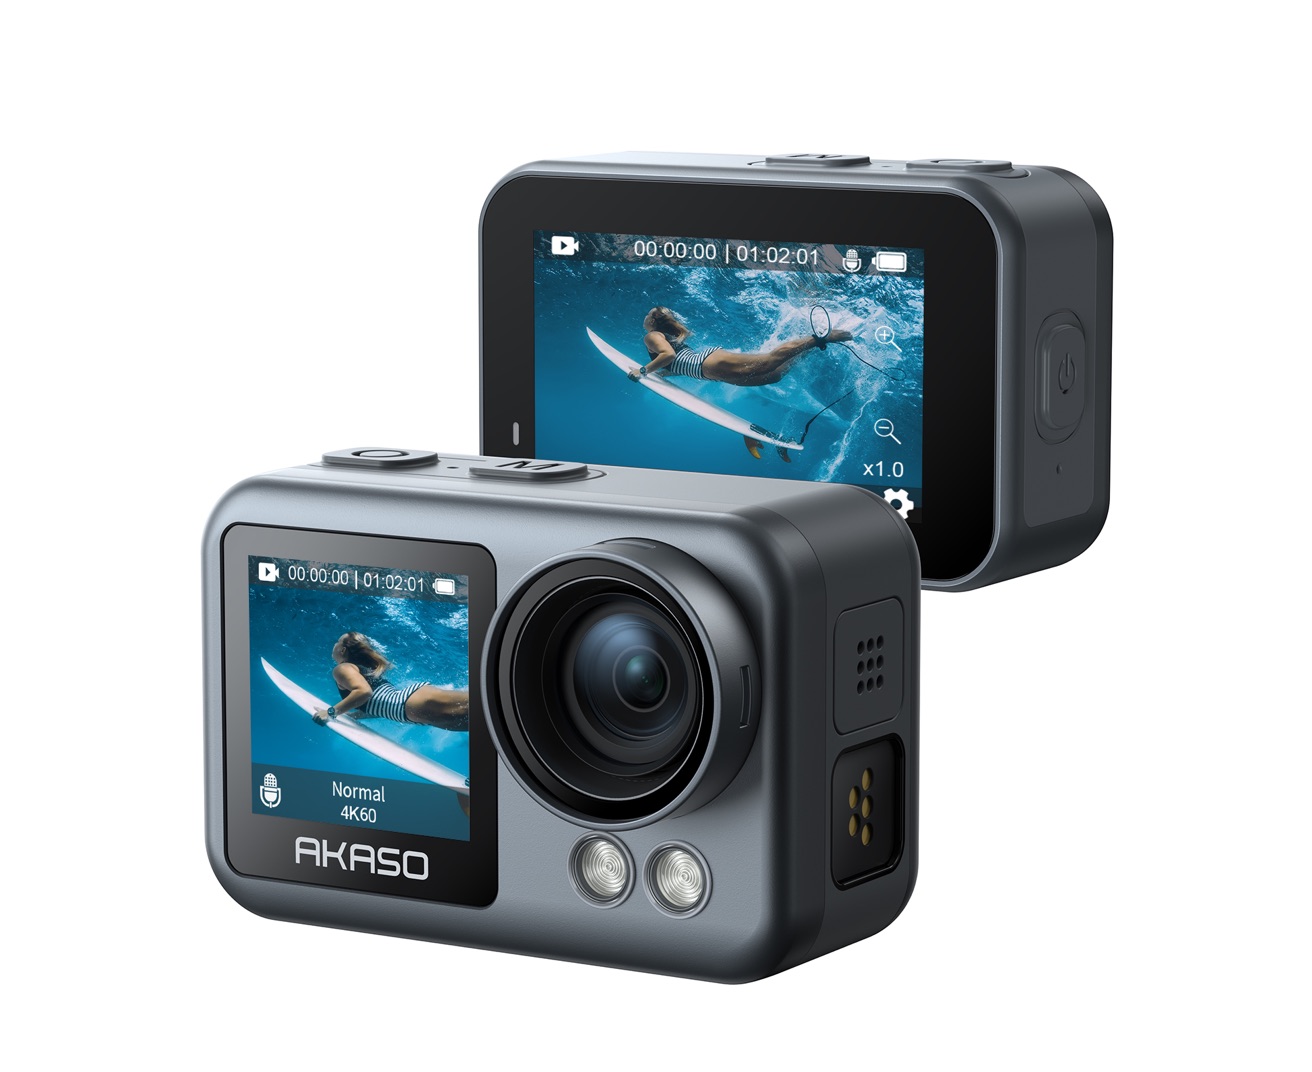 Buy AKASO Brave 4 Elite 4K60fps 20MP Ultra HD Action Camera